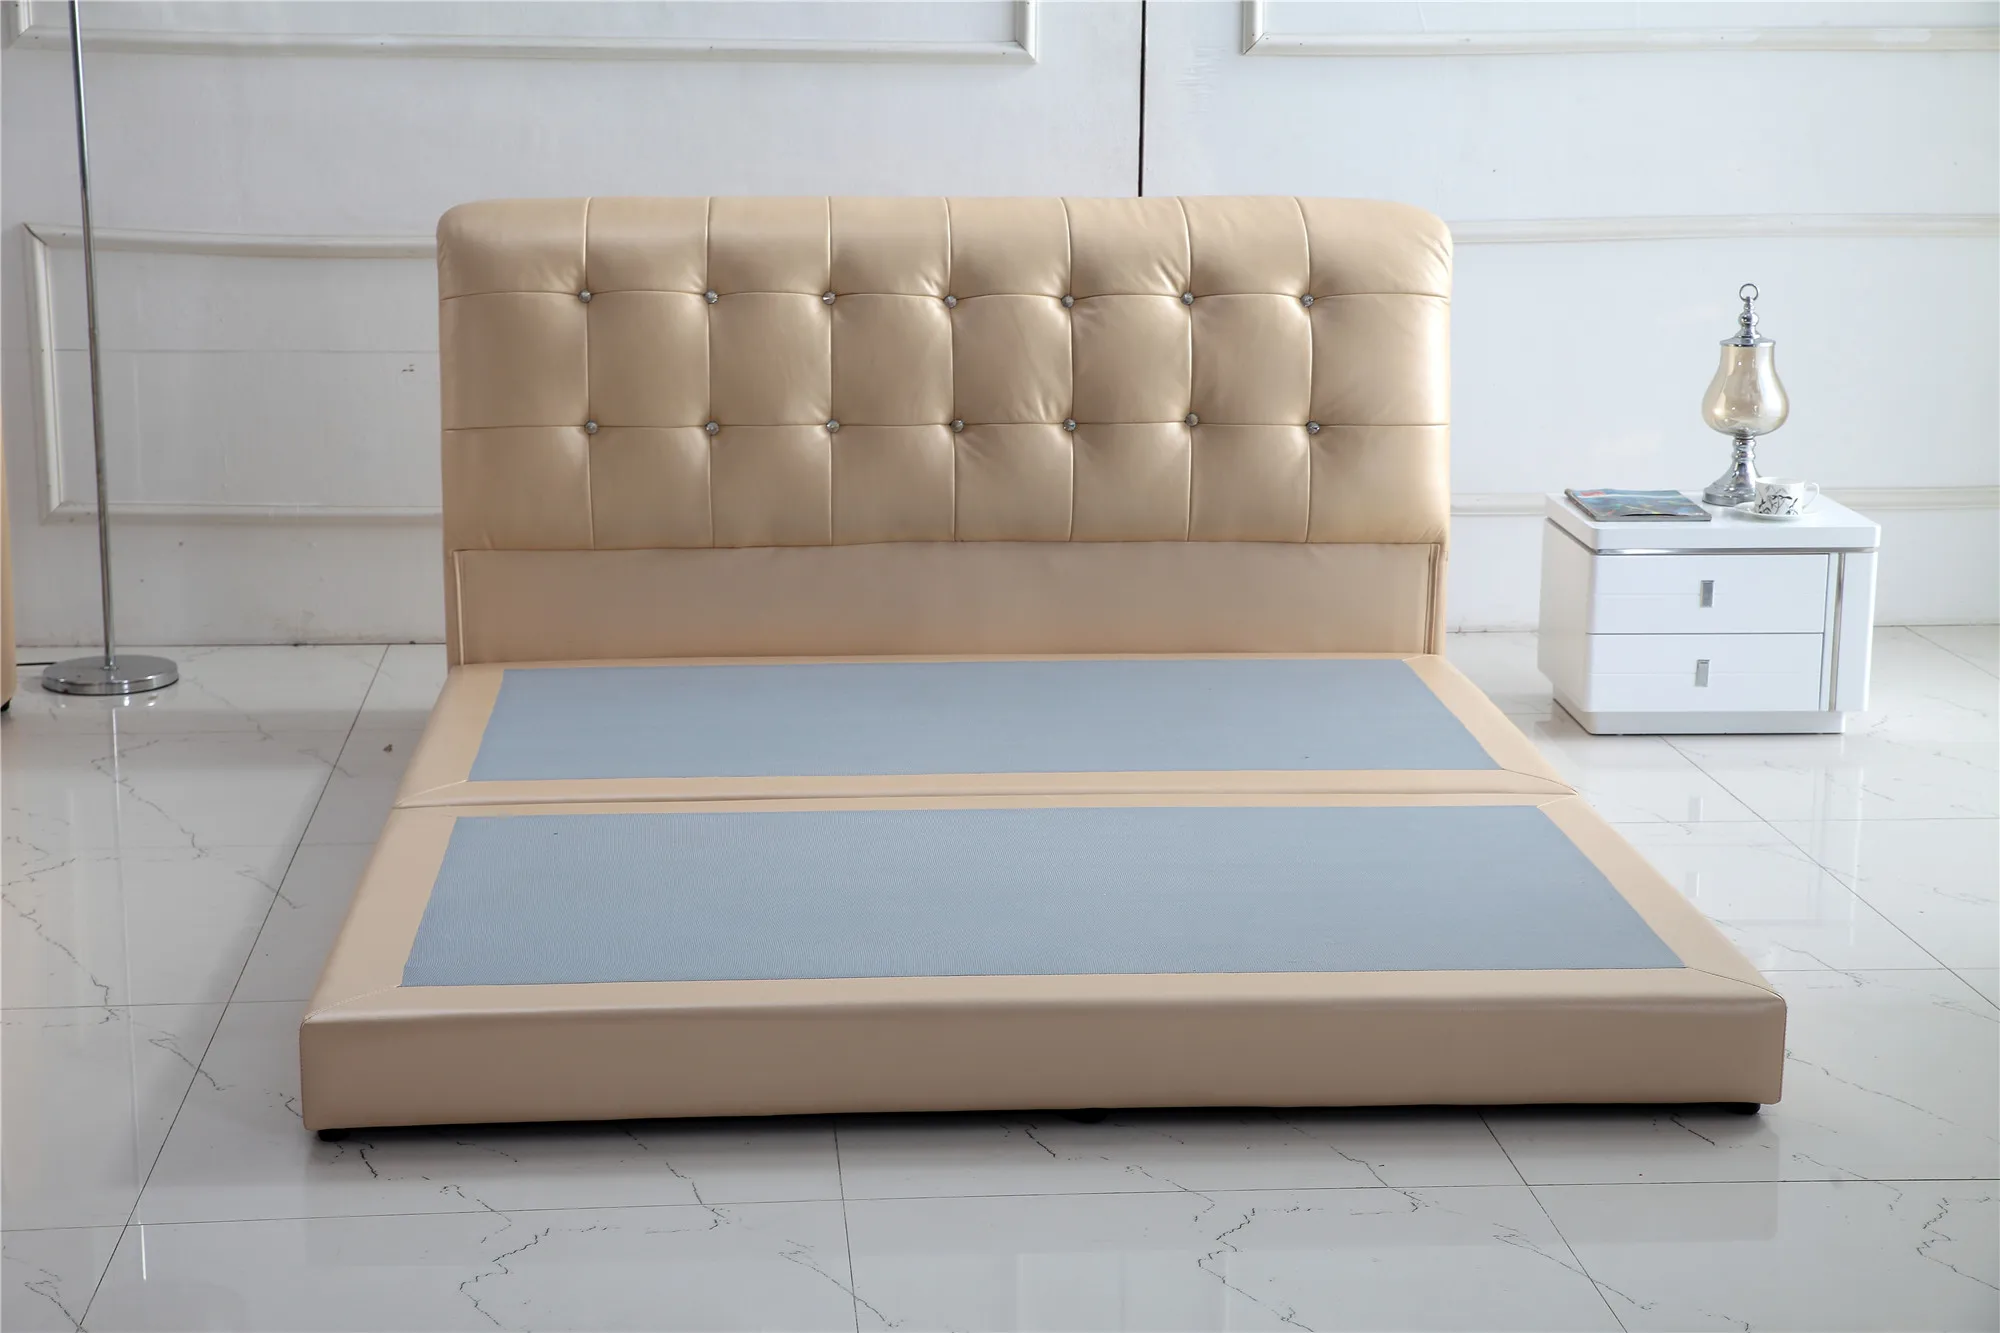 Modern genuine Leather double bed wedding bed bedroom set